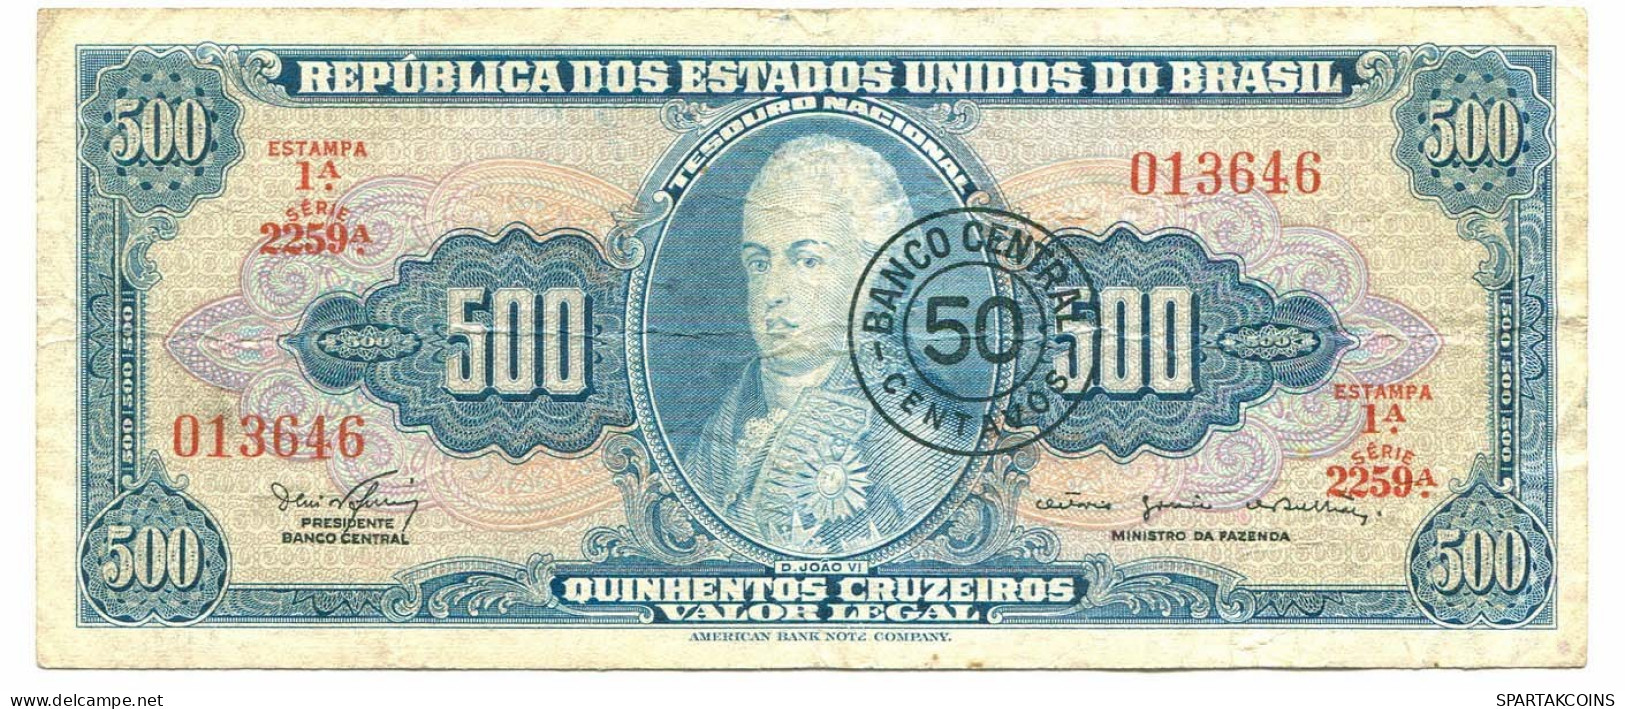 BRASIL 500 CRUZEIROS 1960 SERIE 1195A Paper Money Banknote #P10863.4 - Lokale Ausgaben